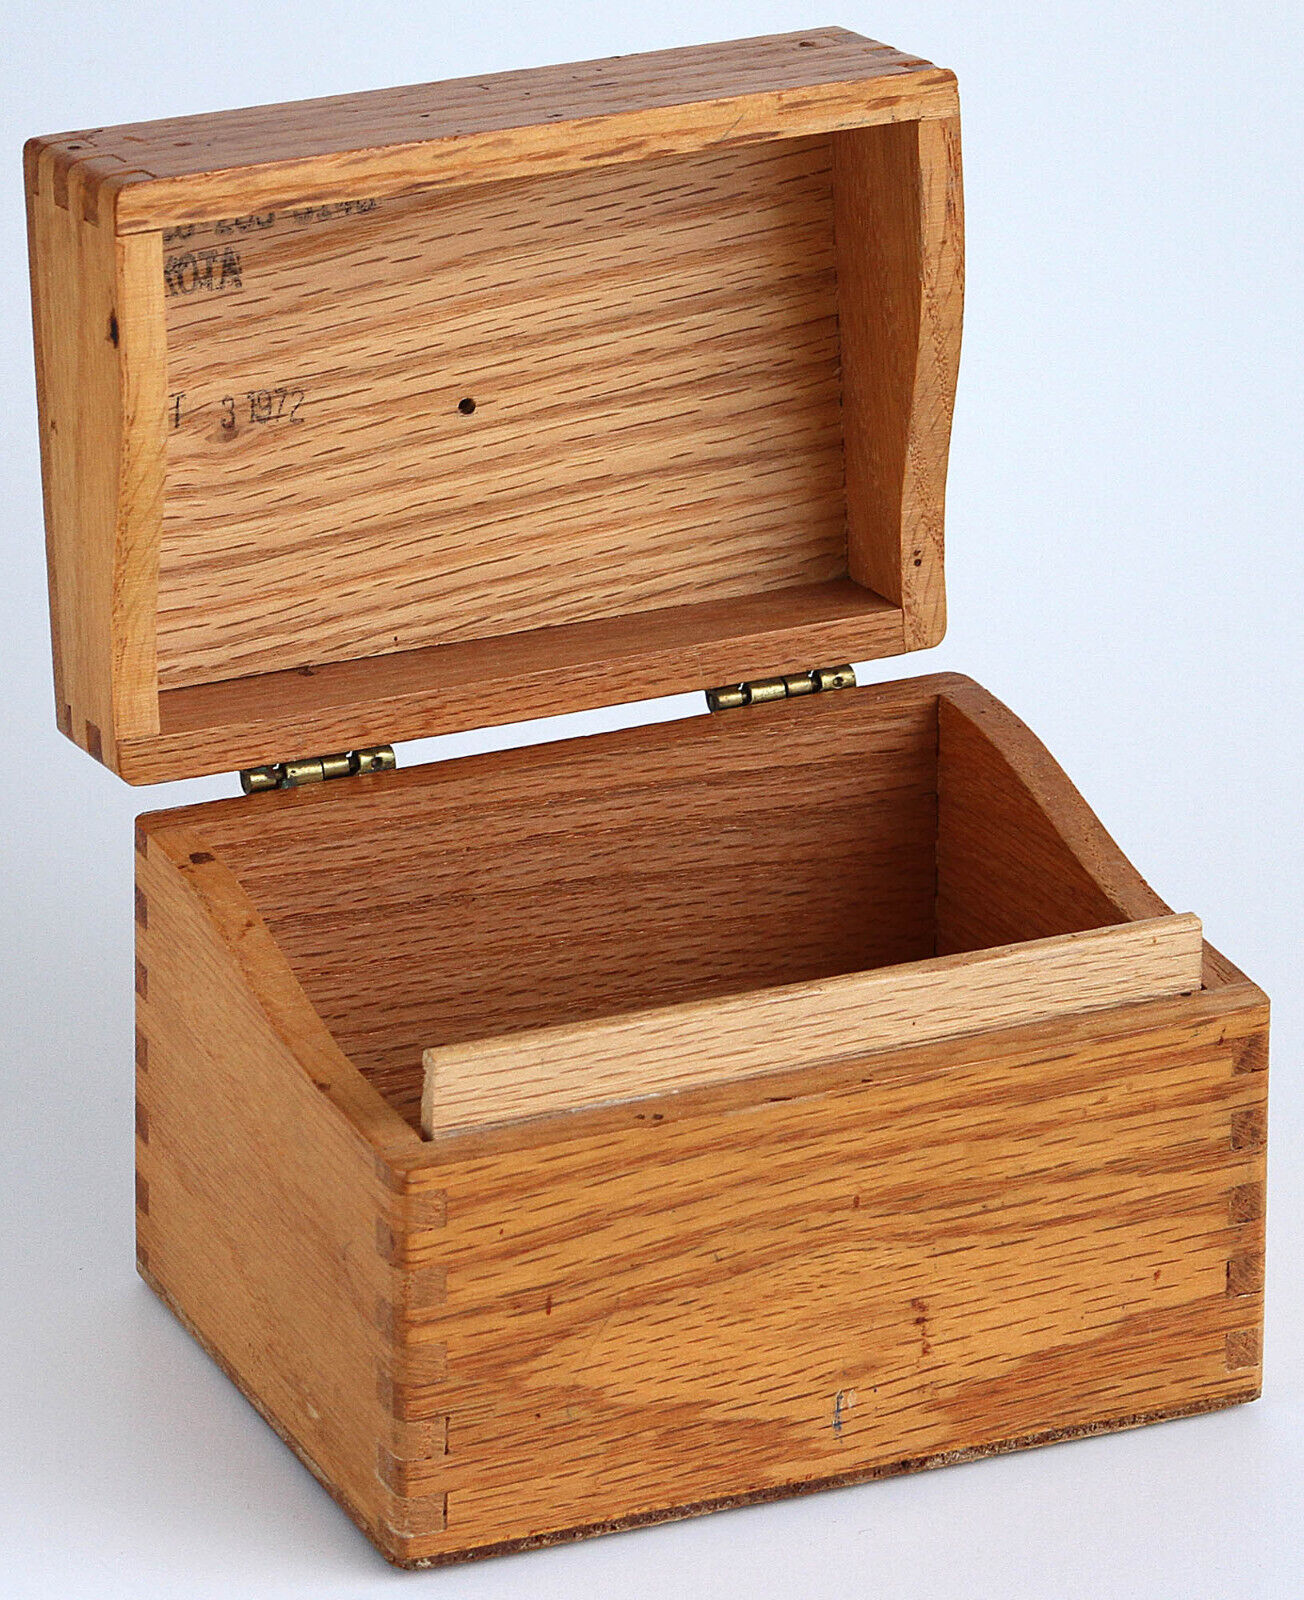 Merchants Box Co. Wooden Vintage Box No.7520-285-3143 Lakota Oct 1972